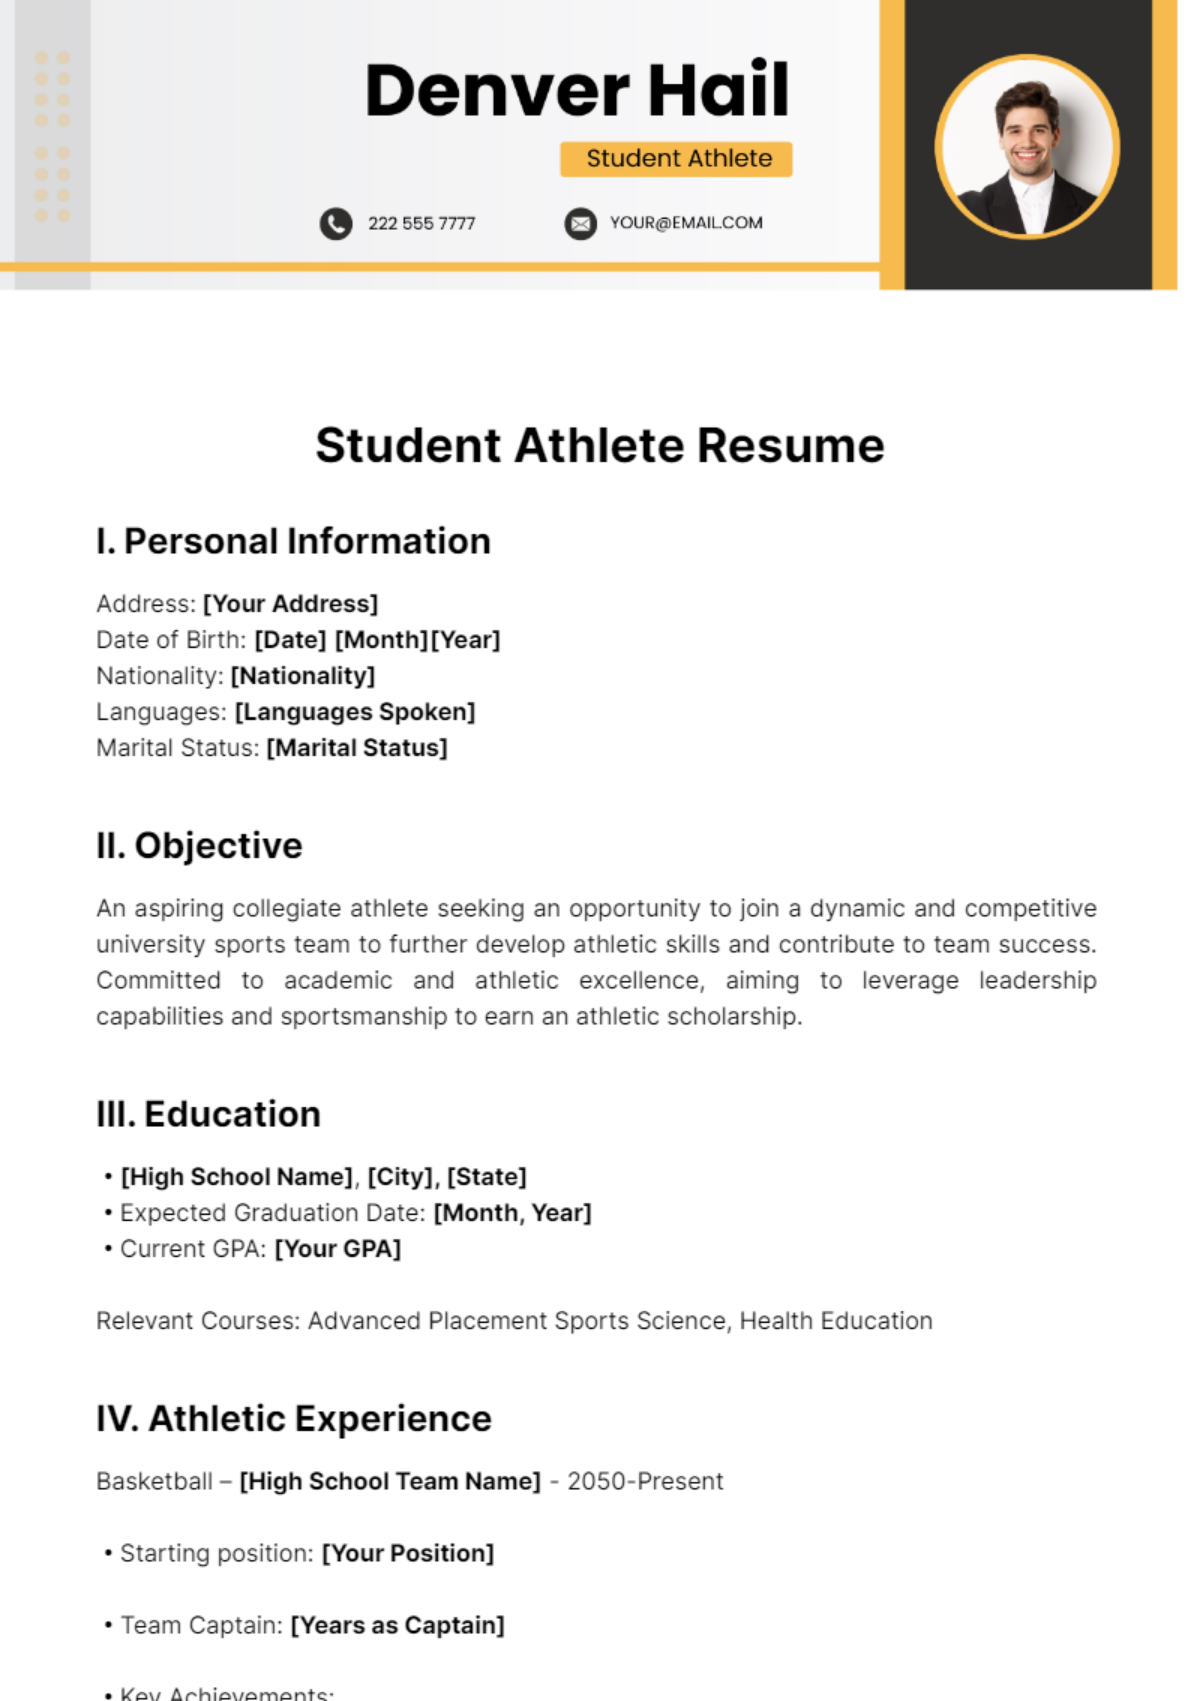 Student Athlete Resume Template